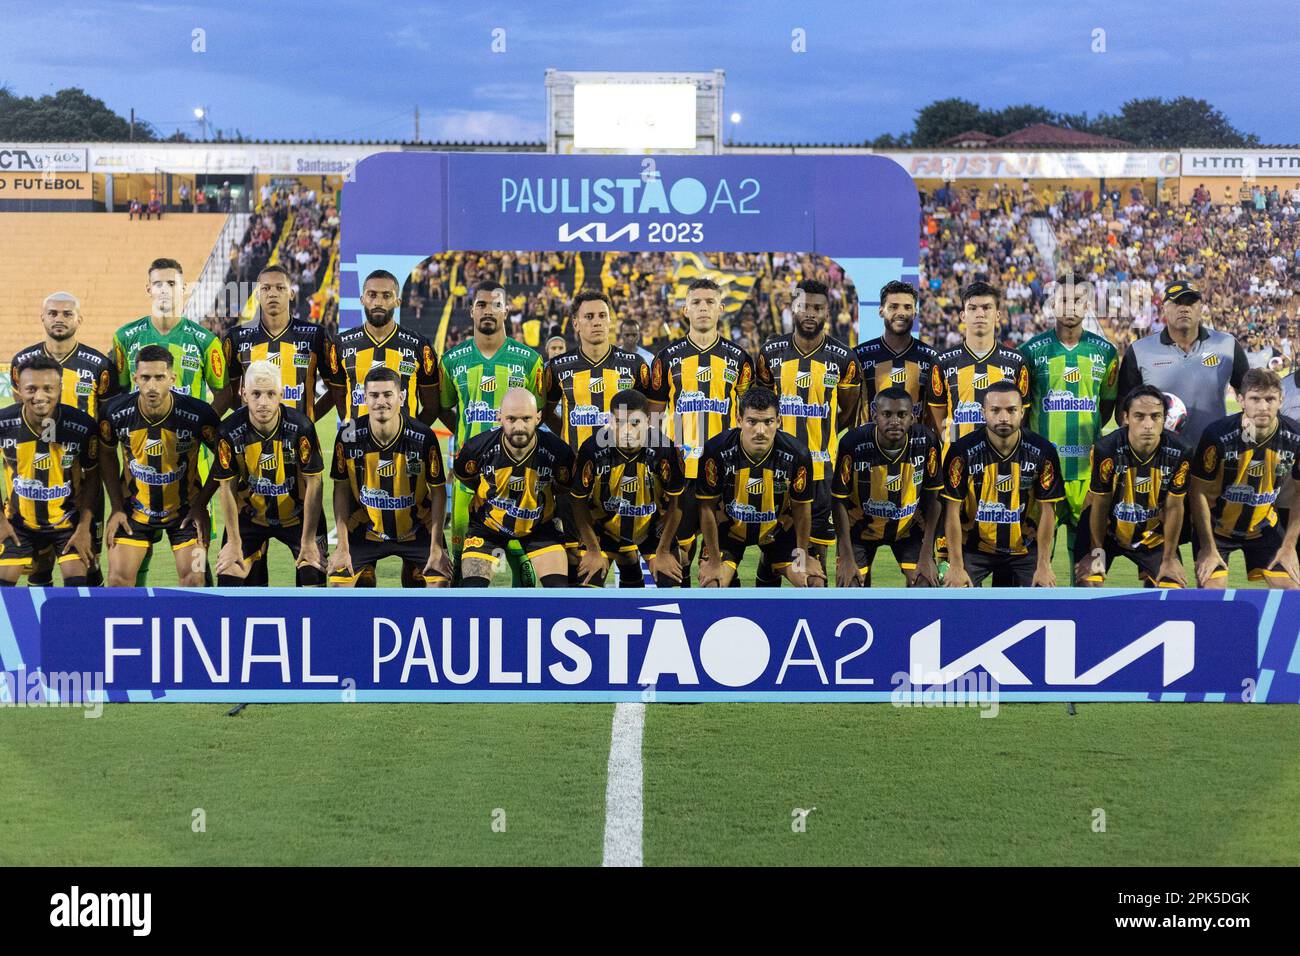 America MG vs Santos: A Clash of Brazilian Football Giants